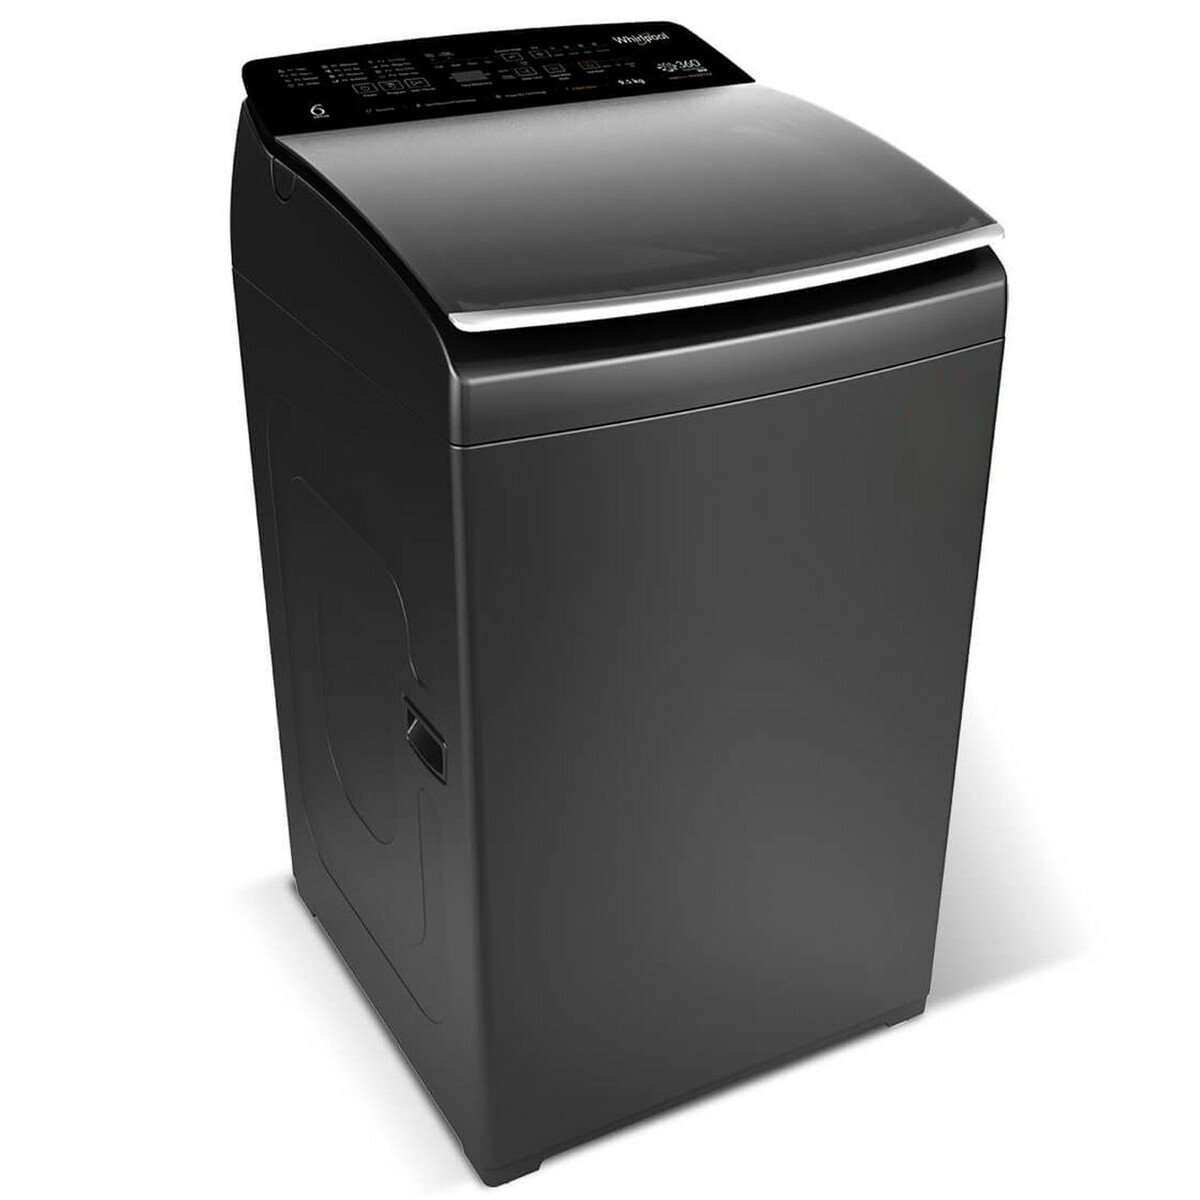 Whirlpool 360 Bloomwash Pro Heater Top Load Washing Machine Graphite 9.5Kg